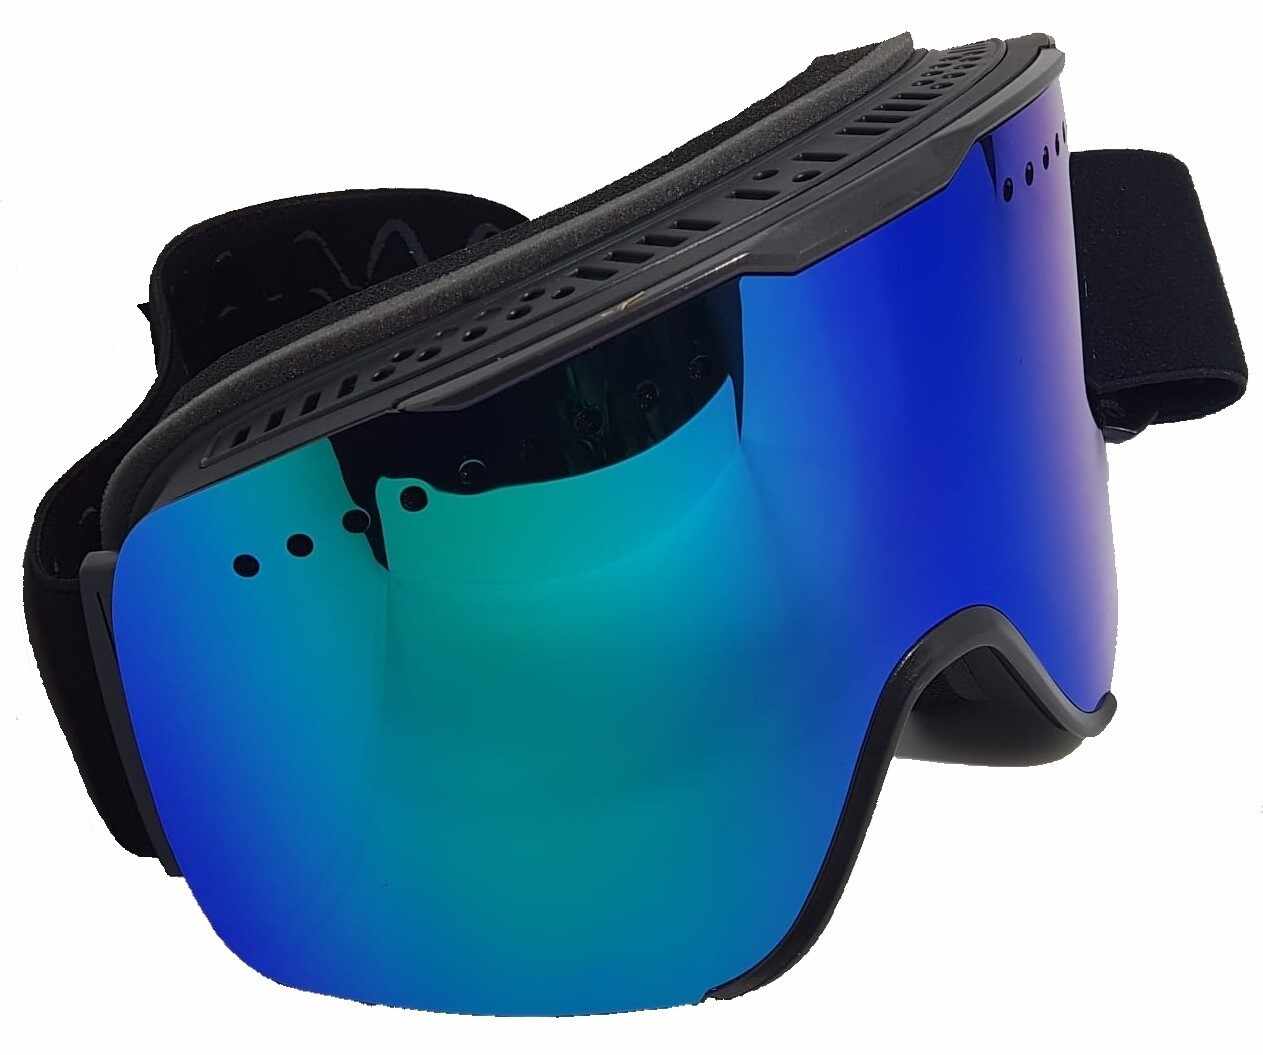 Ochelari ski/snowboard, lentila sferica dubla, magnetica, polarizata, ventilate anti-ceata,strat oglinda A++++